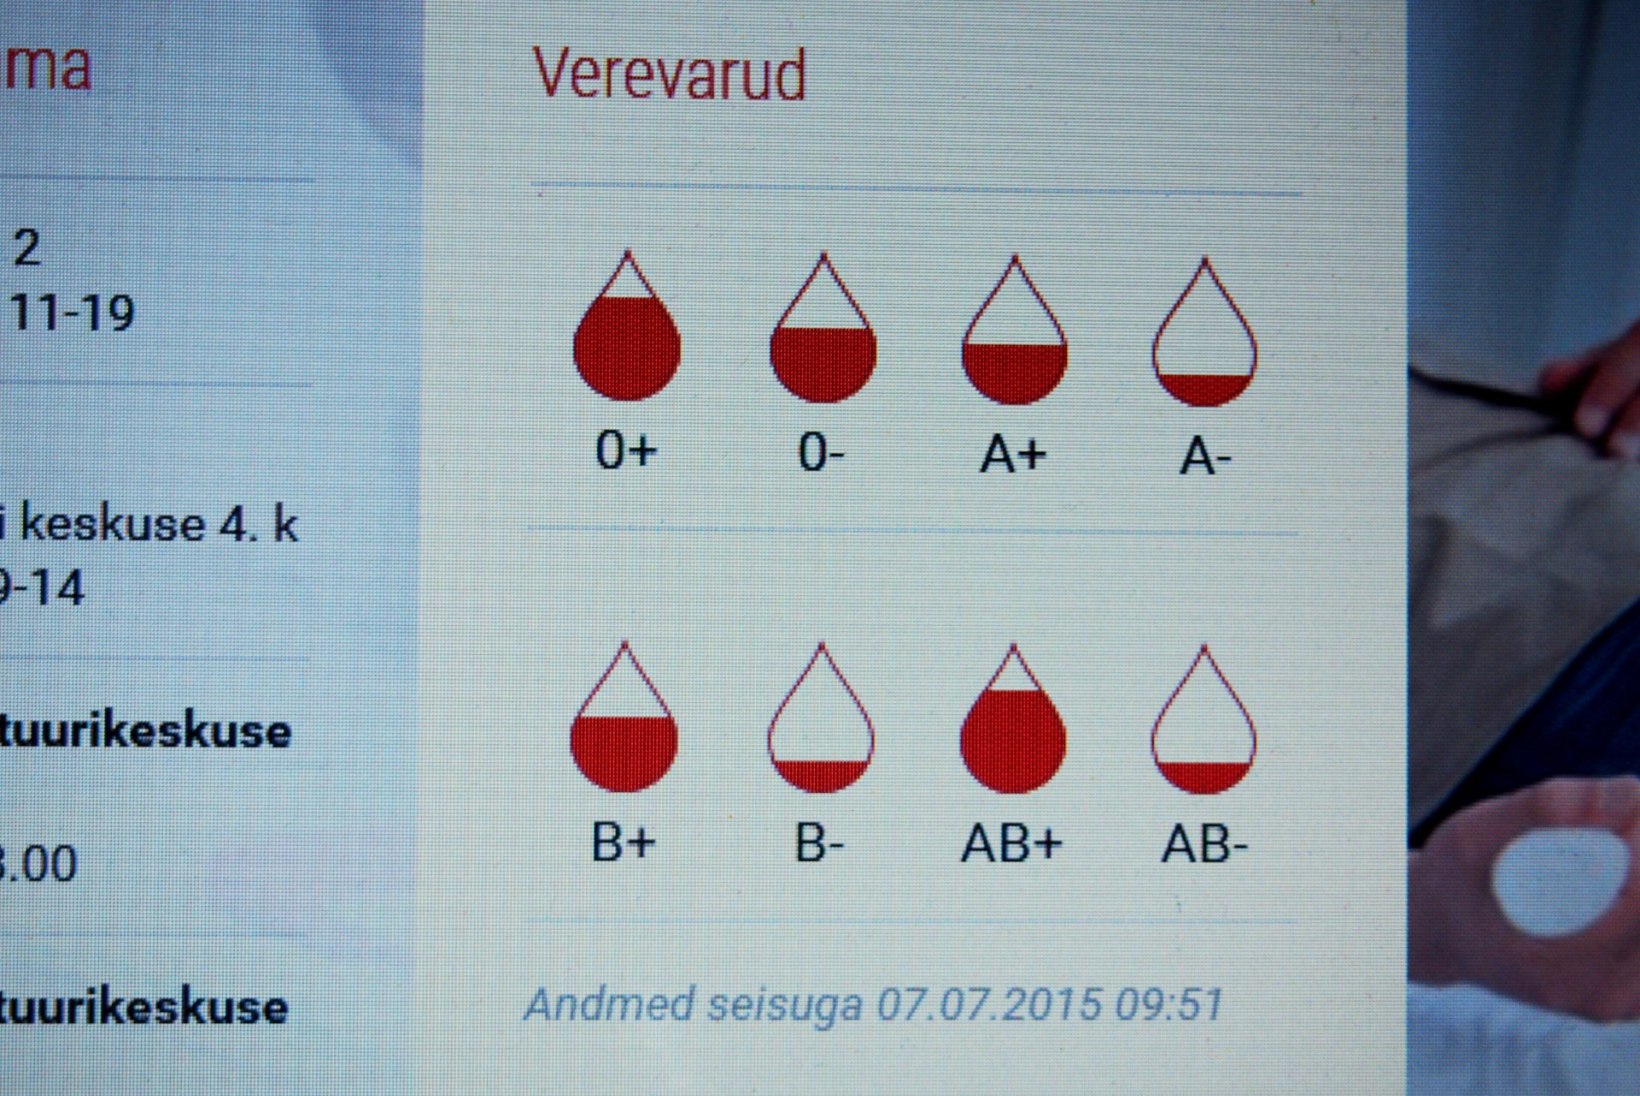 Tallinna verekeskuses napib kolme veregrupi verd